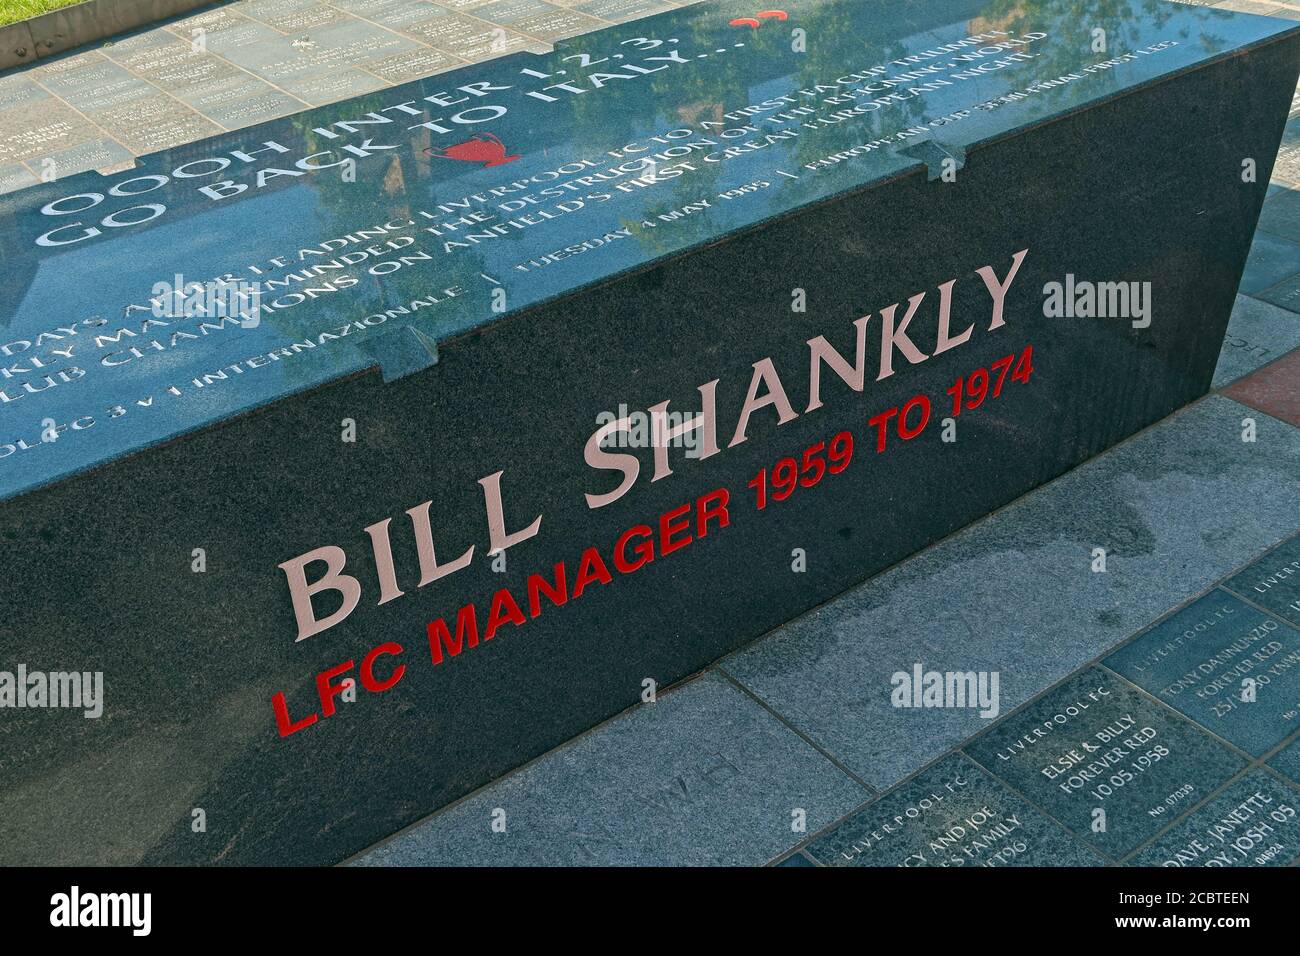 Bill Shankly Stone 1959-1974, LFC, Liverpool Football Club, Anfield, Premier League, Merseyside, North West England, UK, L4 2UZ Foto Stock